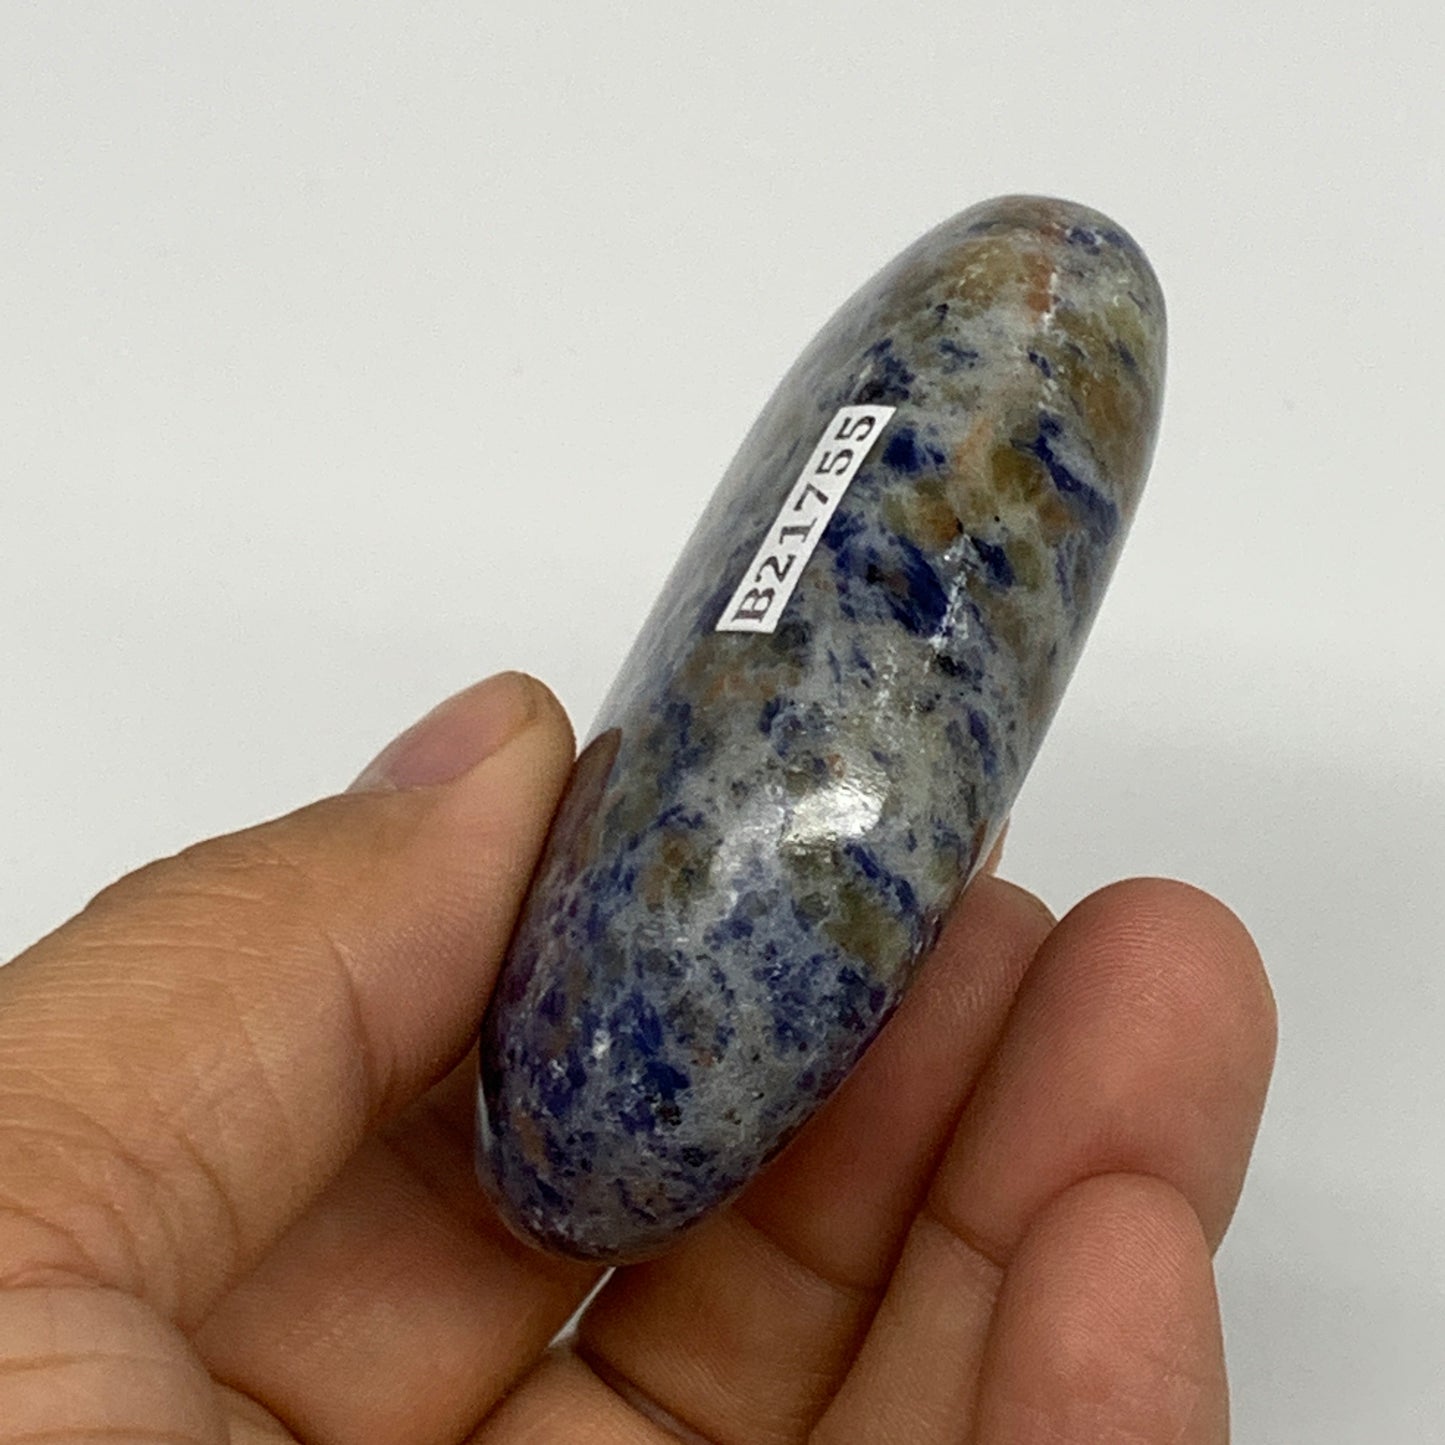 97.9g, 2.7"x1.6"x0.8", Sodalite Palm-Stone Crystal Polished Handmade, B21755